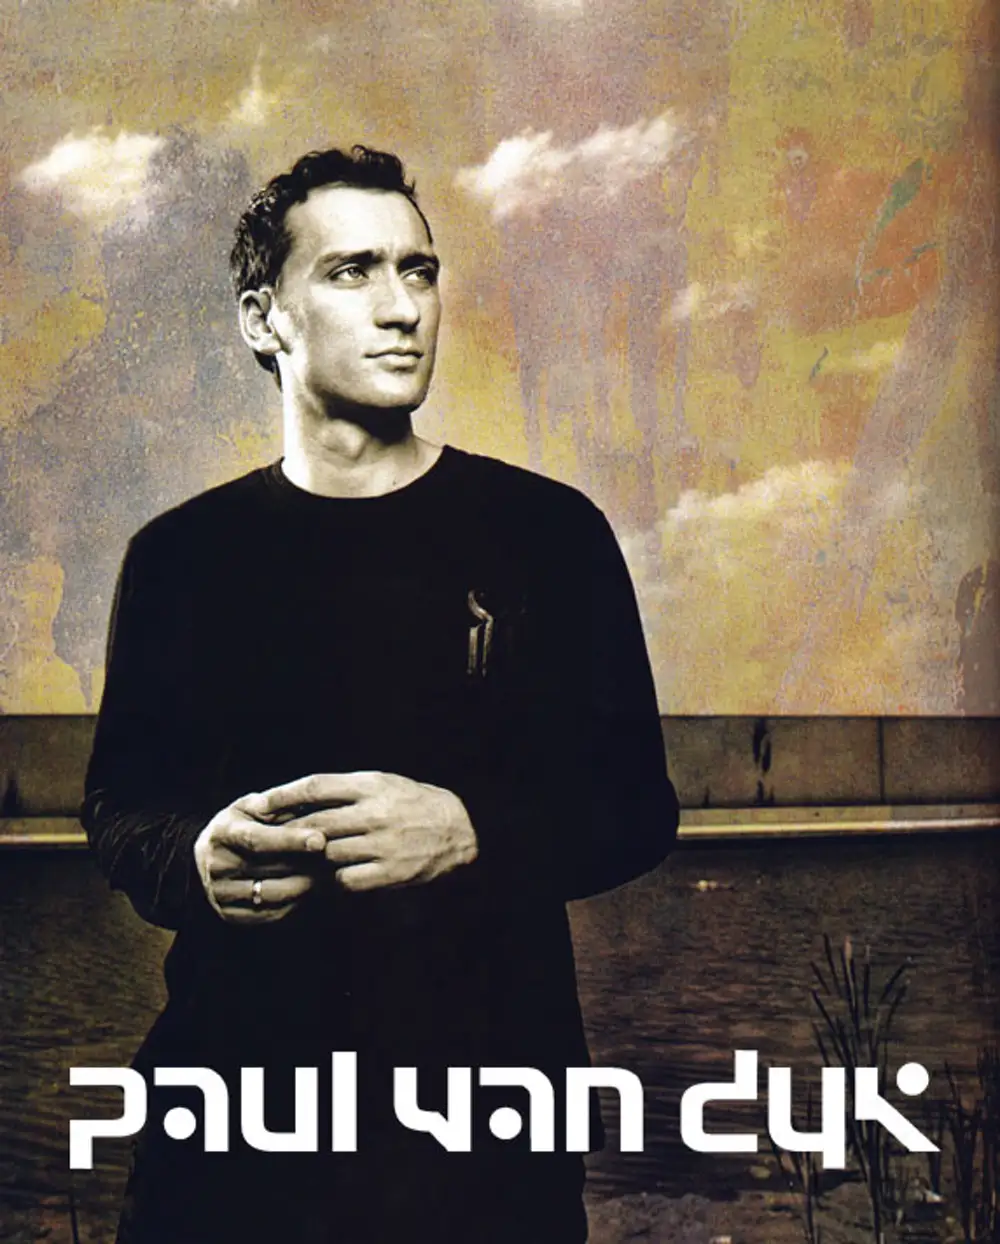 Paul van dyk rea garvey. Paul van Dyk Let go. Paul van Dyk discography. Фото респект. 2009 - Vonyc sessions 2009.